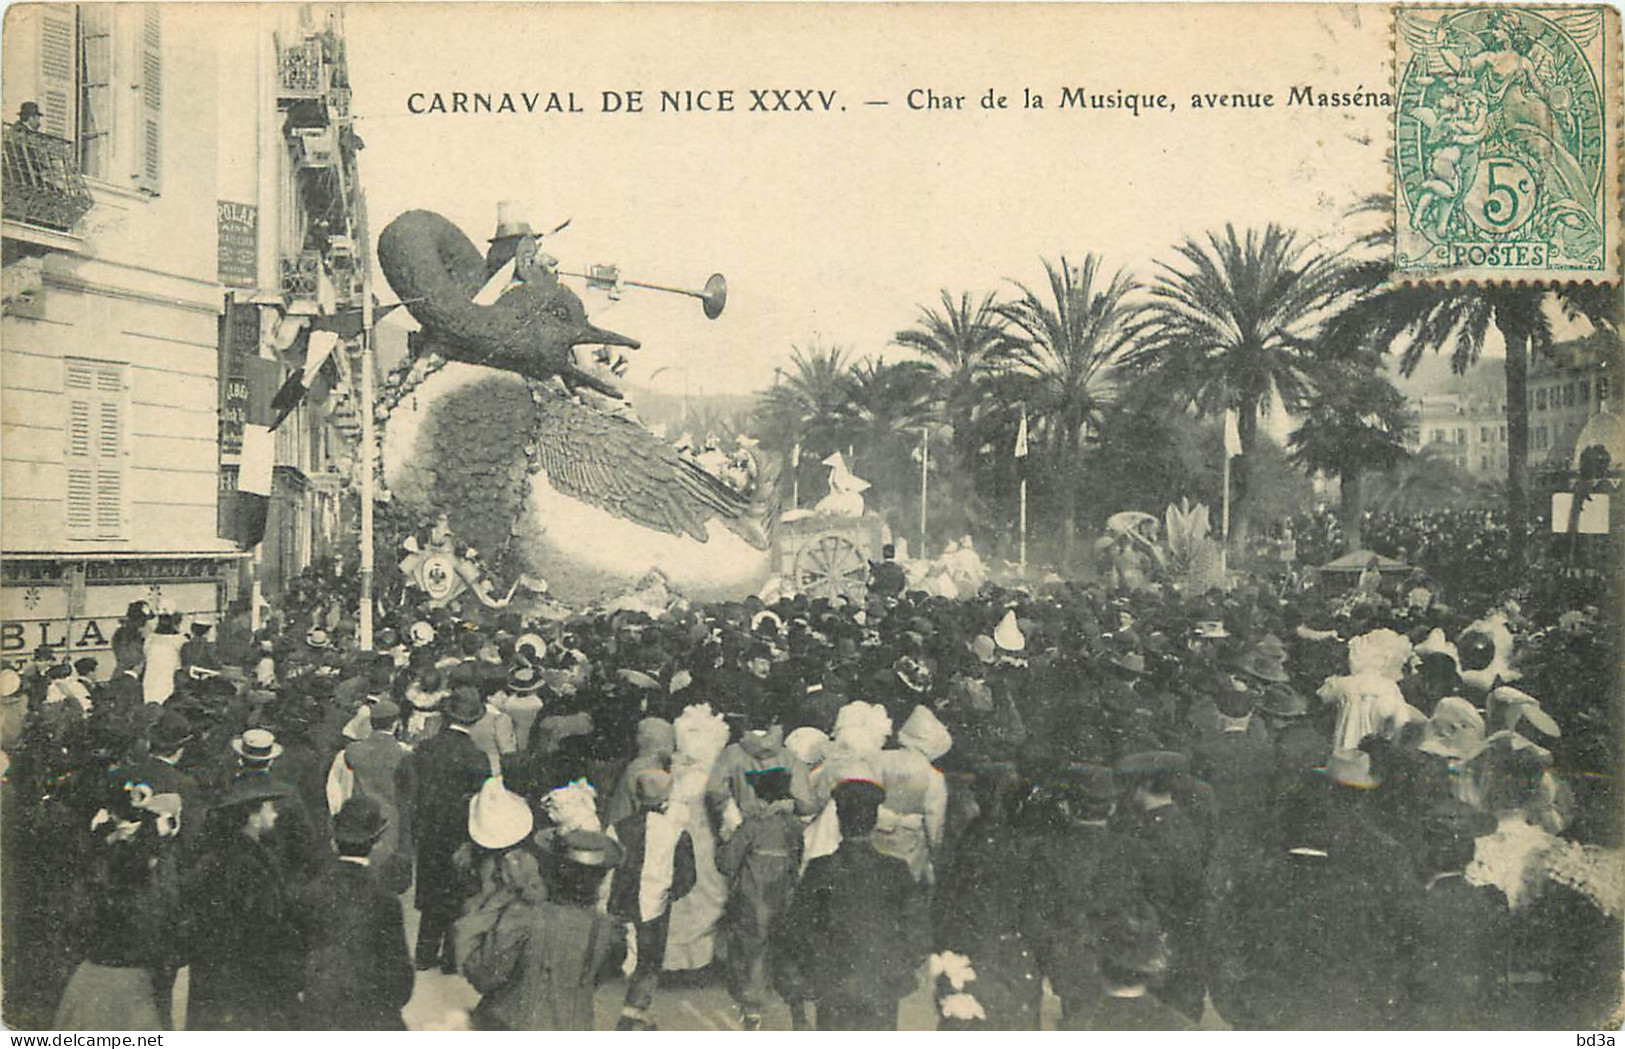 06 - CARNAVAL DE NICE XXXV -  CHAR DE LA MUSIQUE AVENUE MASSENA - Carnival